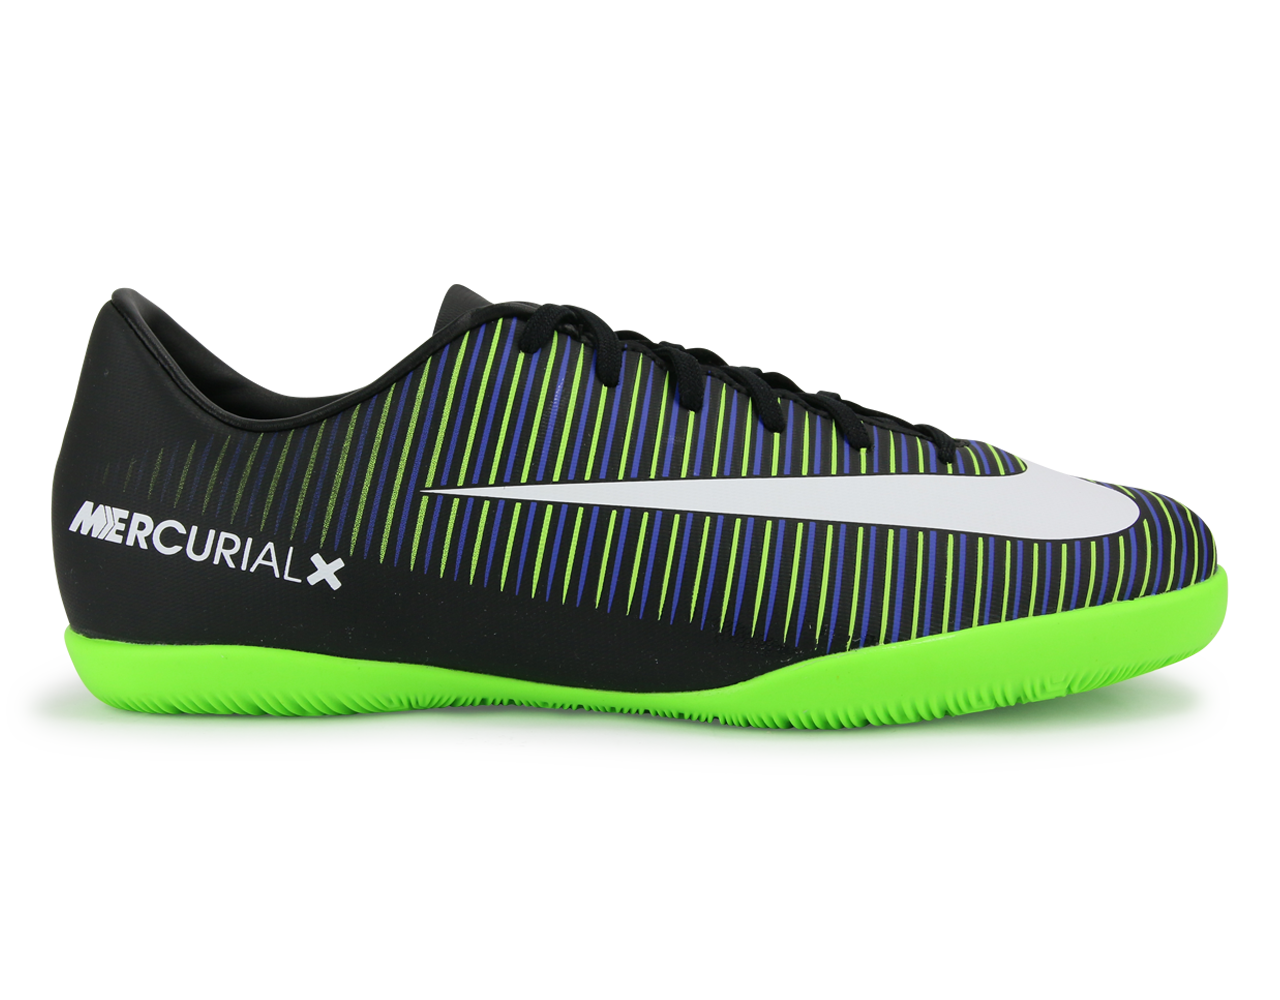 Nike Kids MercurialX Vapor VI Indoor Shoes Black/White/Electric Green